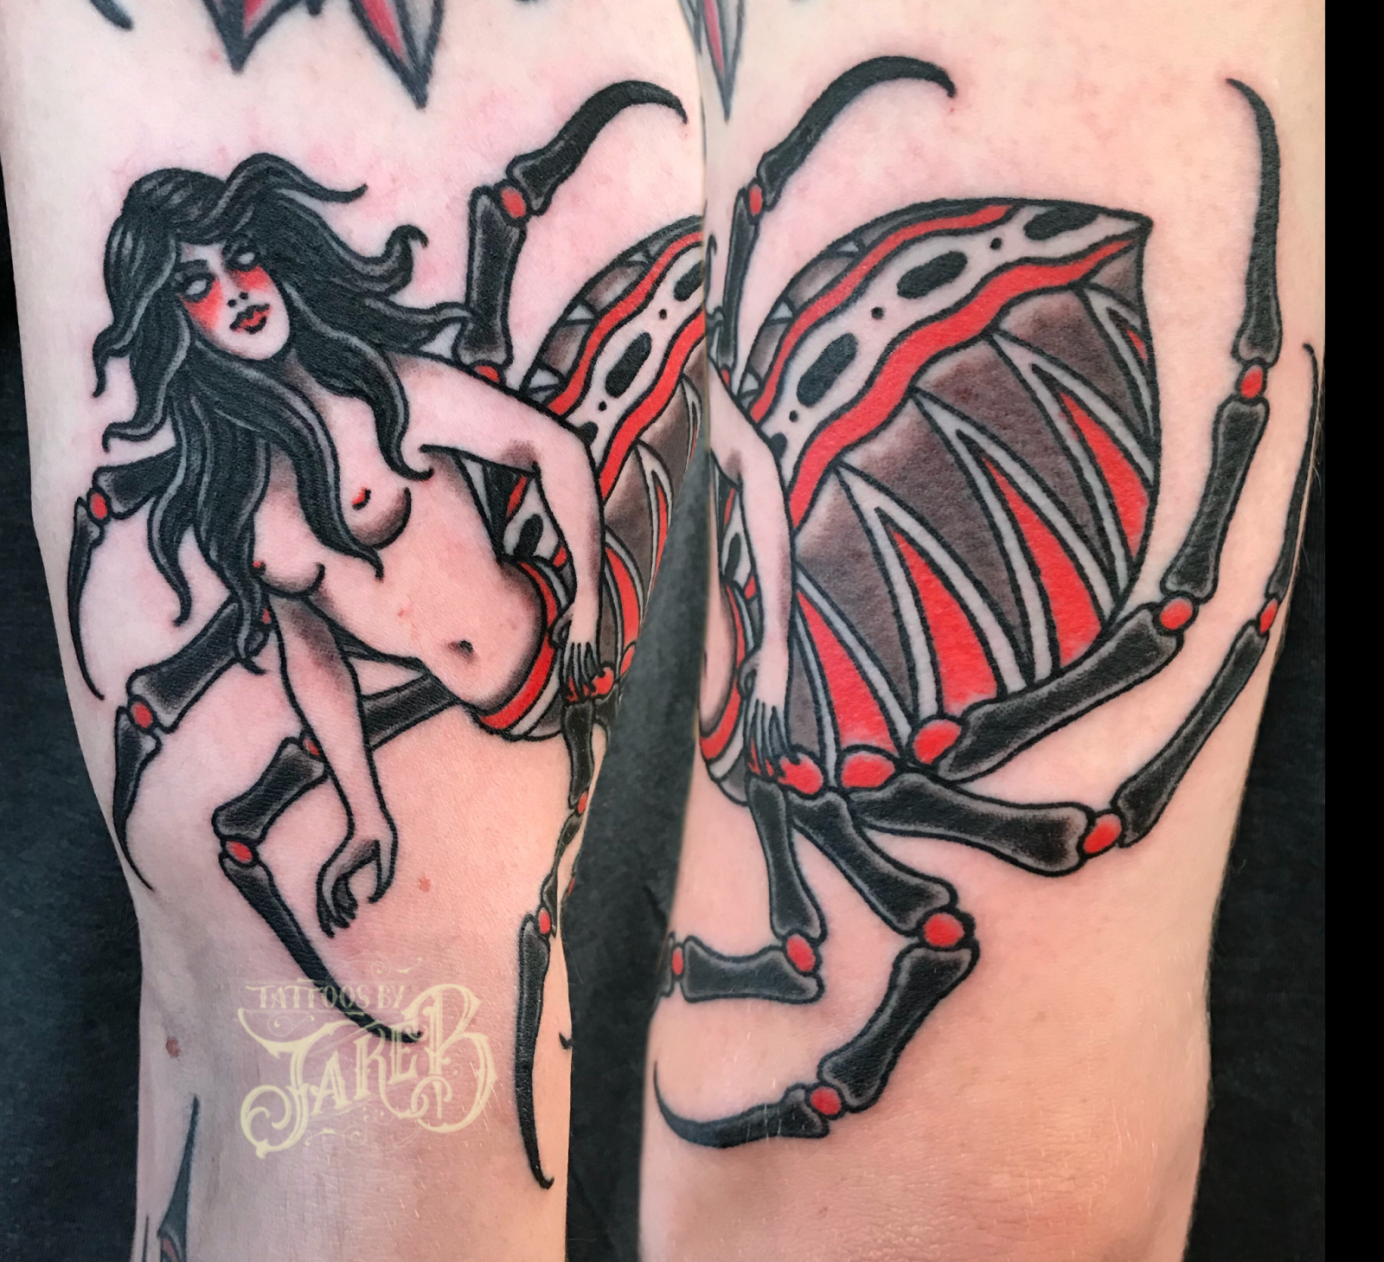 creepy spider lady tattoo by Jake B